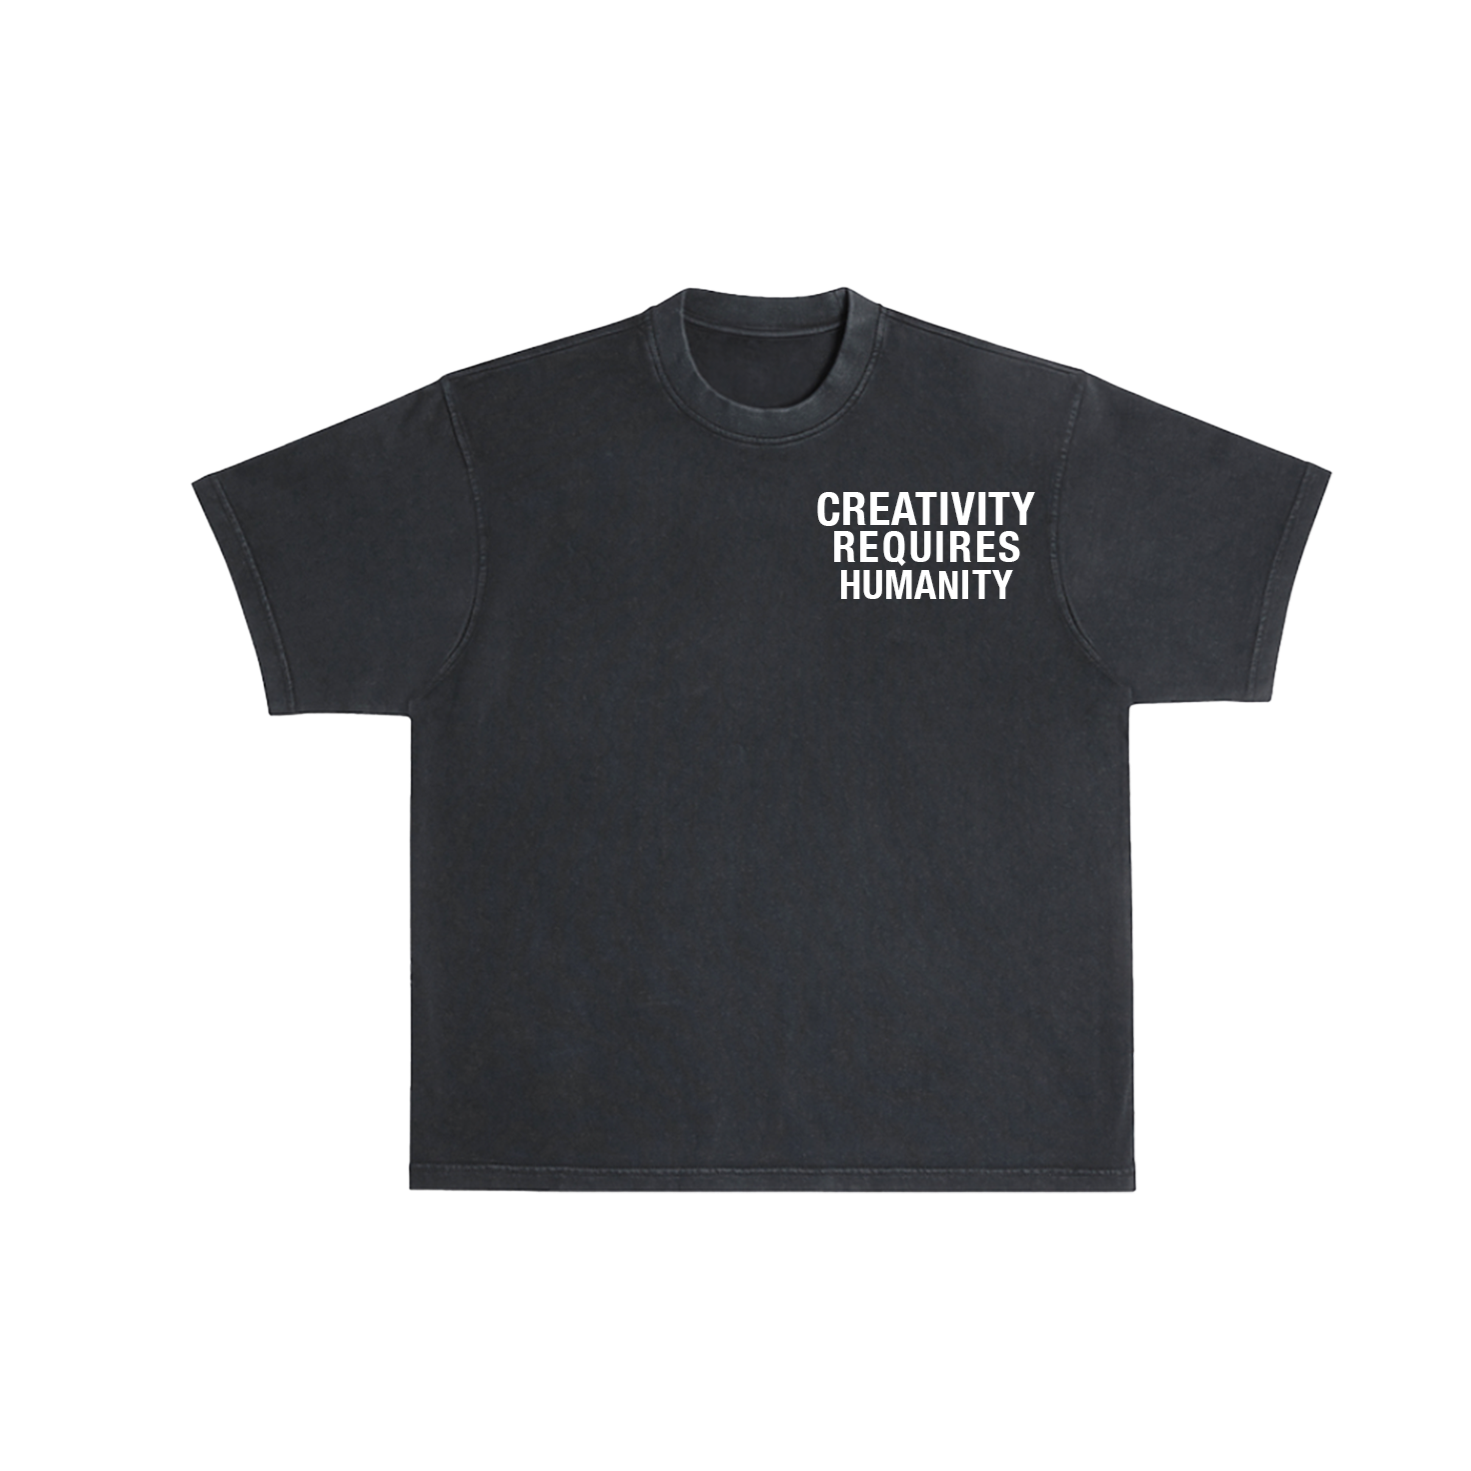 CREATIVITY REQUIRES HUMANITY T-Shirt (Black + White)